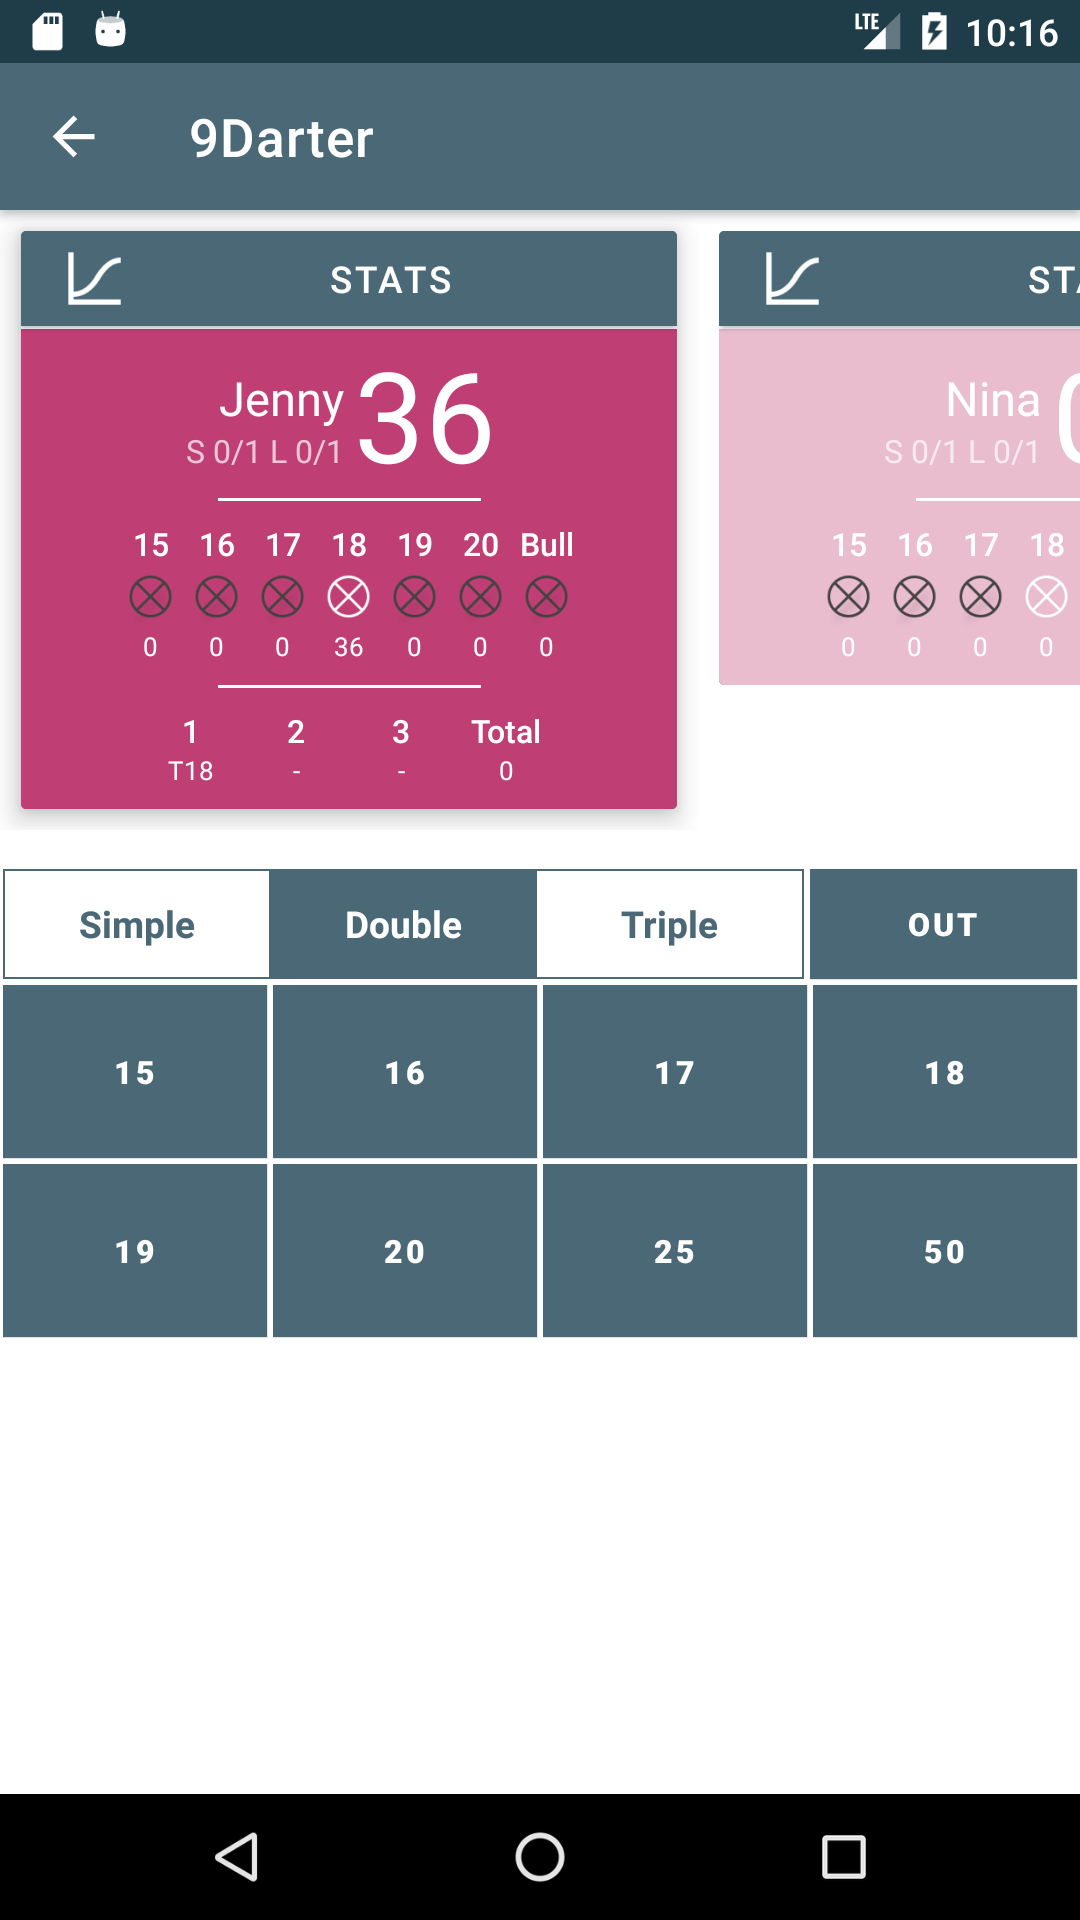 9Darter - Darts Scoreboard